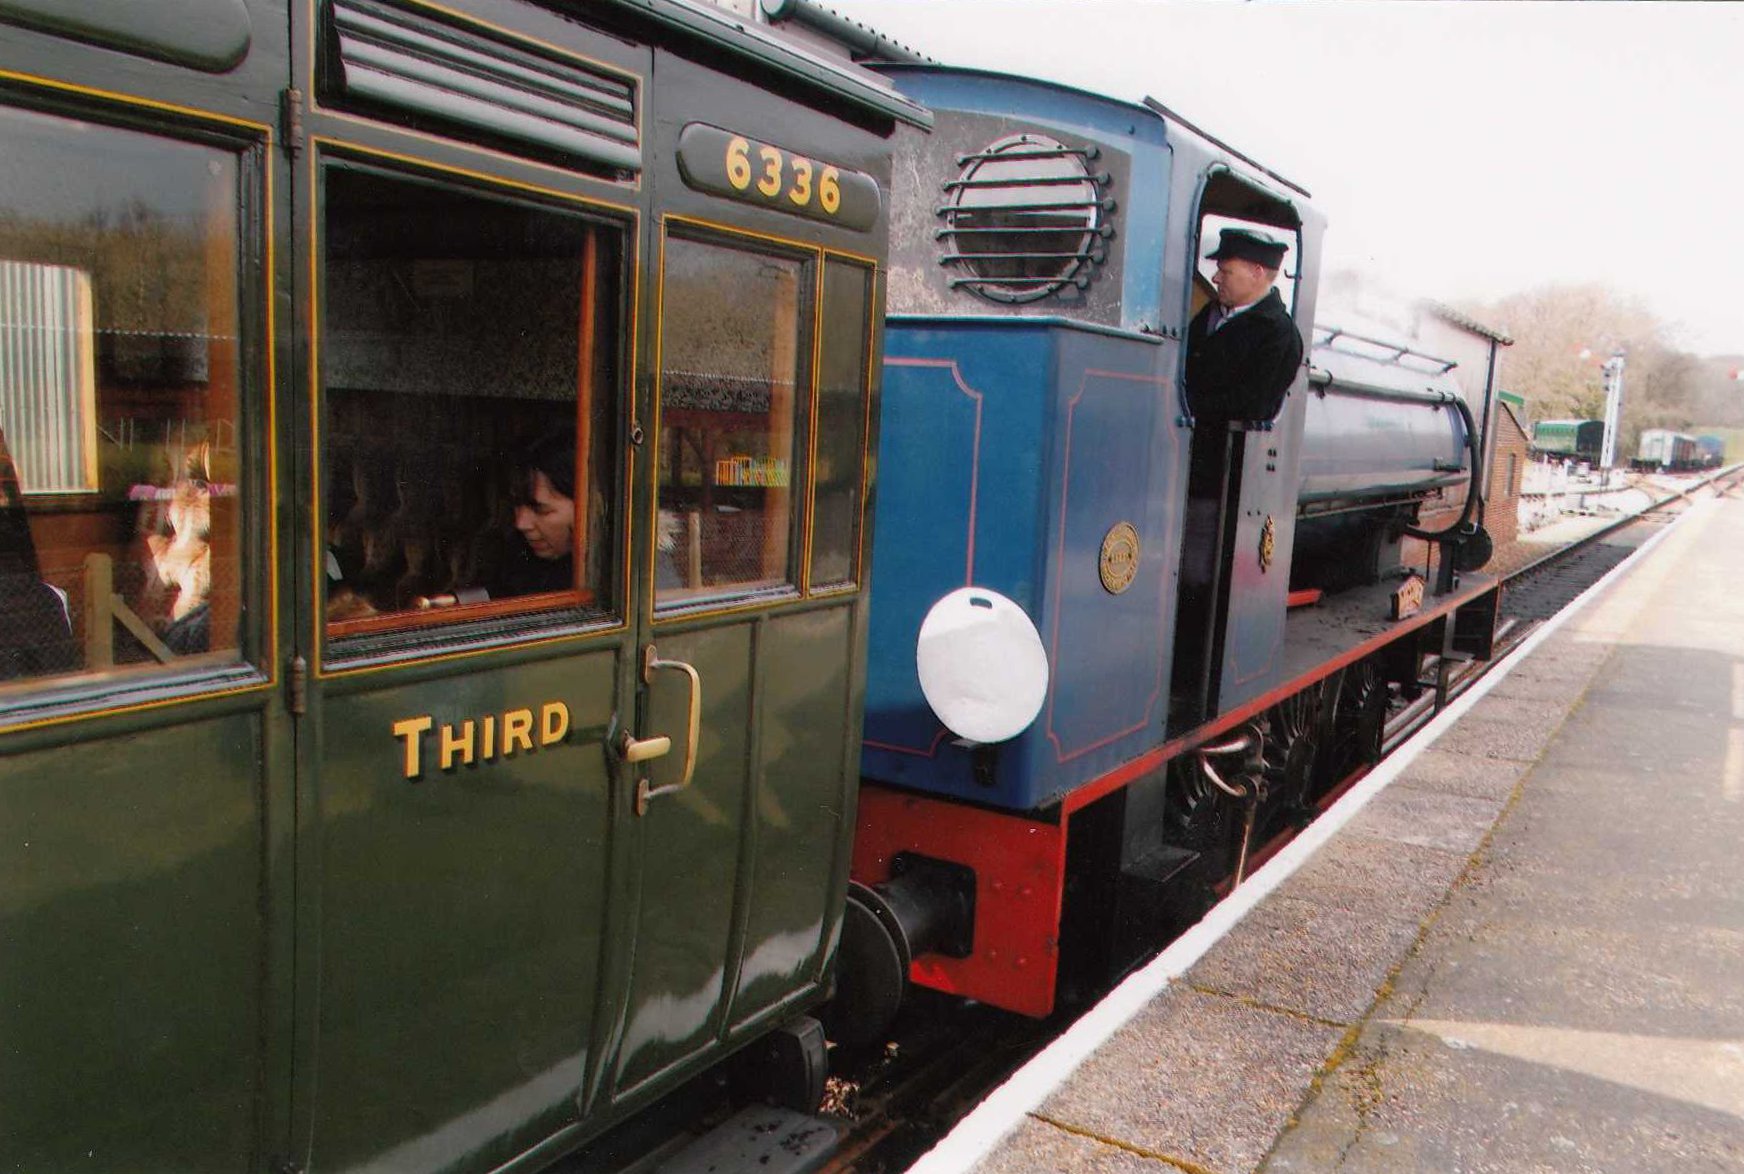 Isle of Wight steam railway